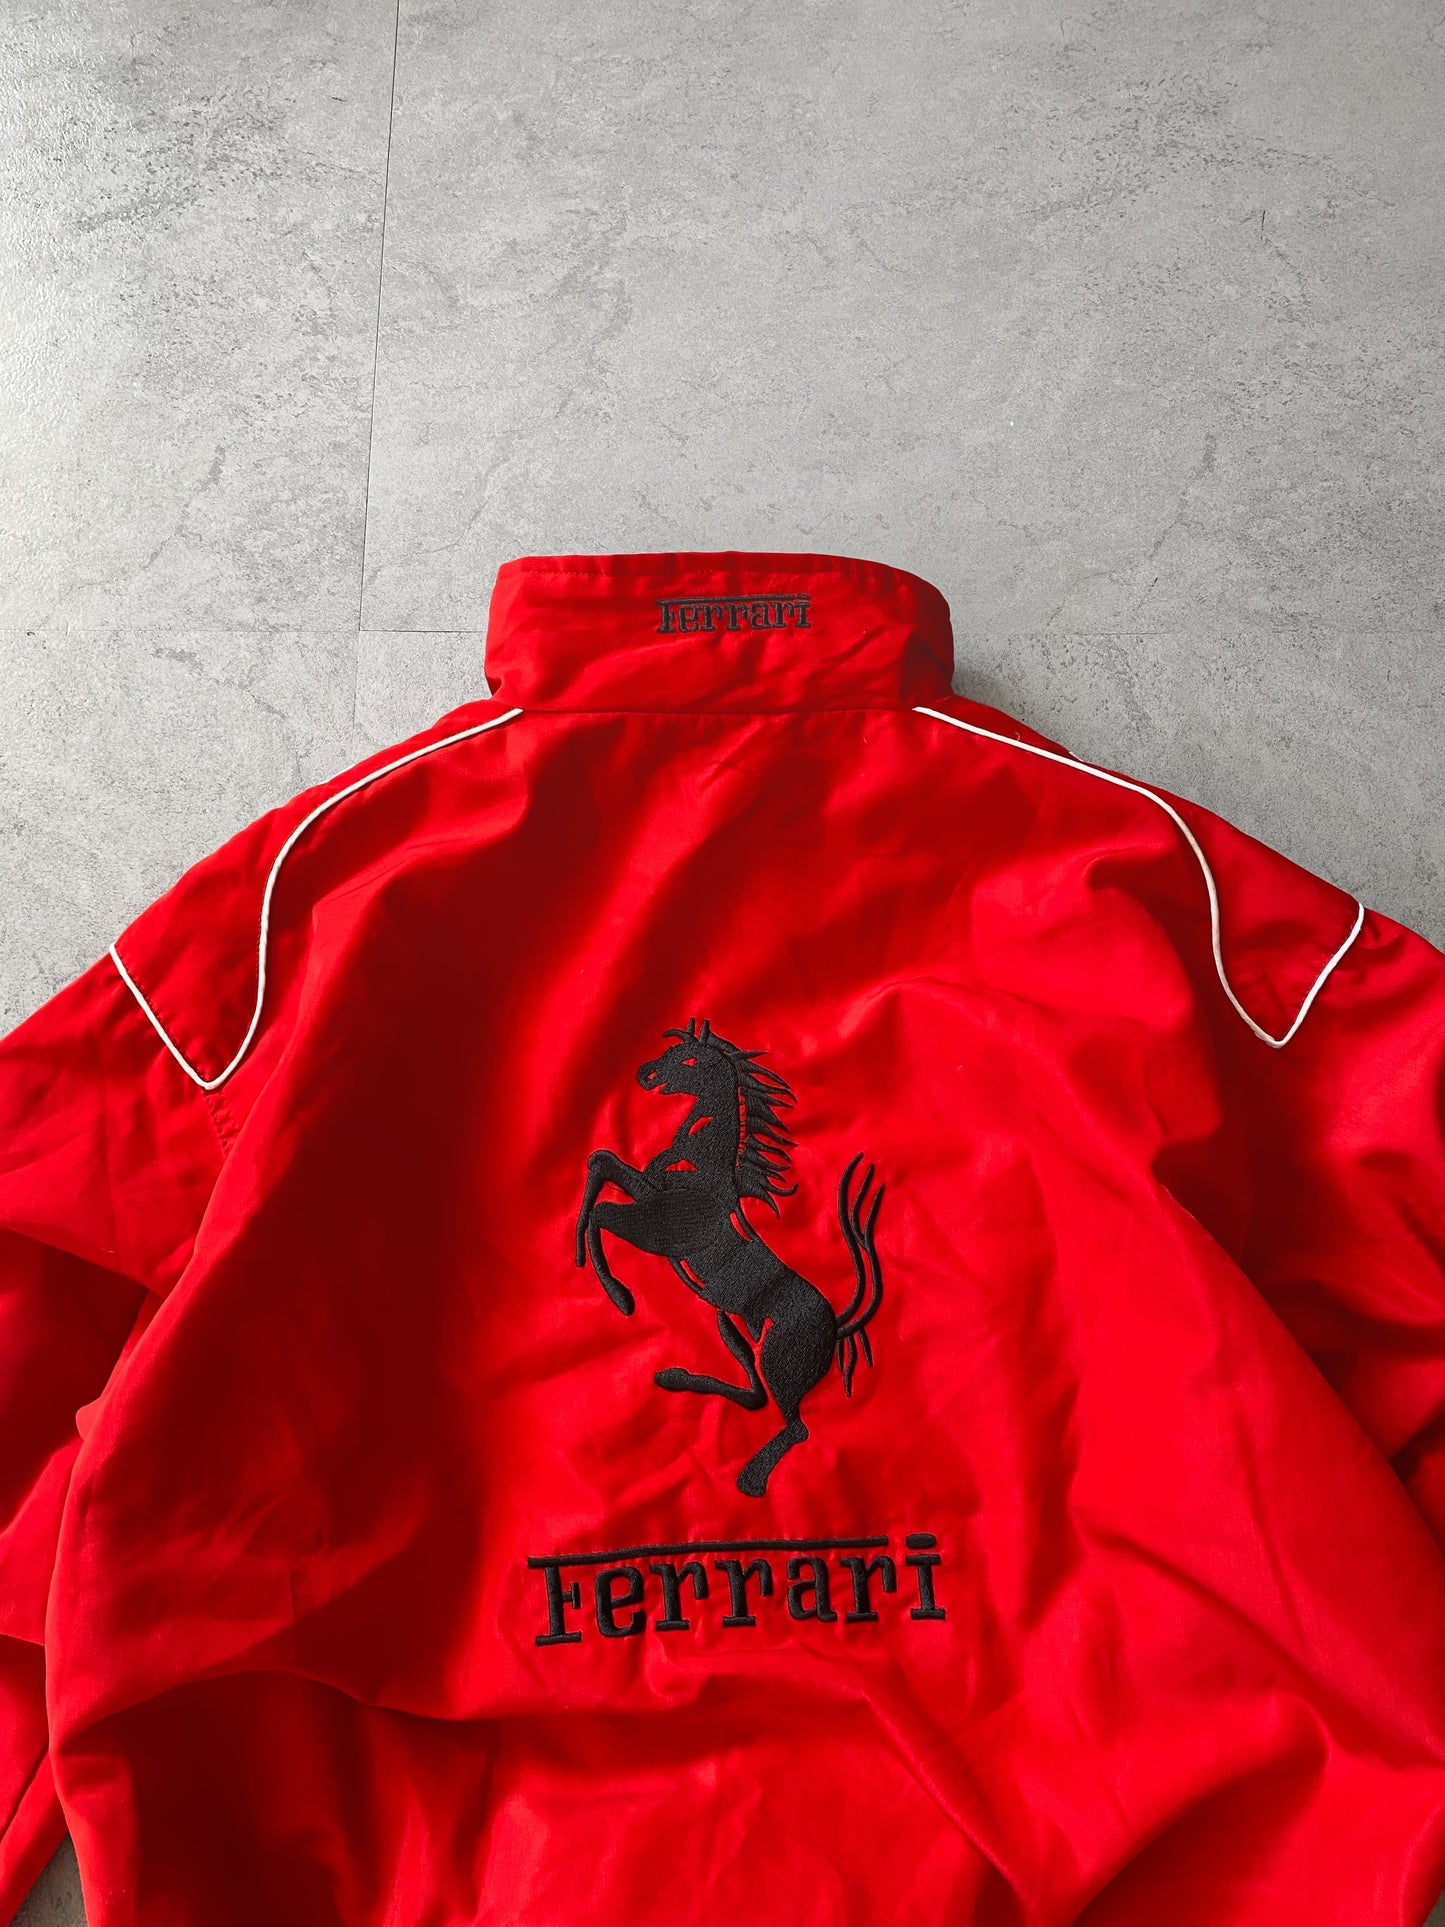 90s Vintage Ferrari Bomber Racing Jacket